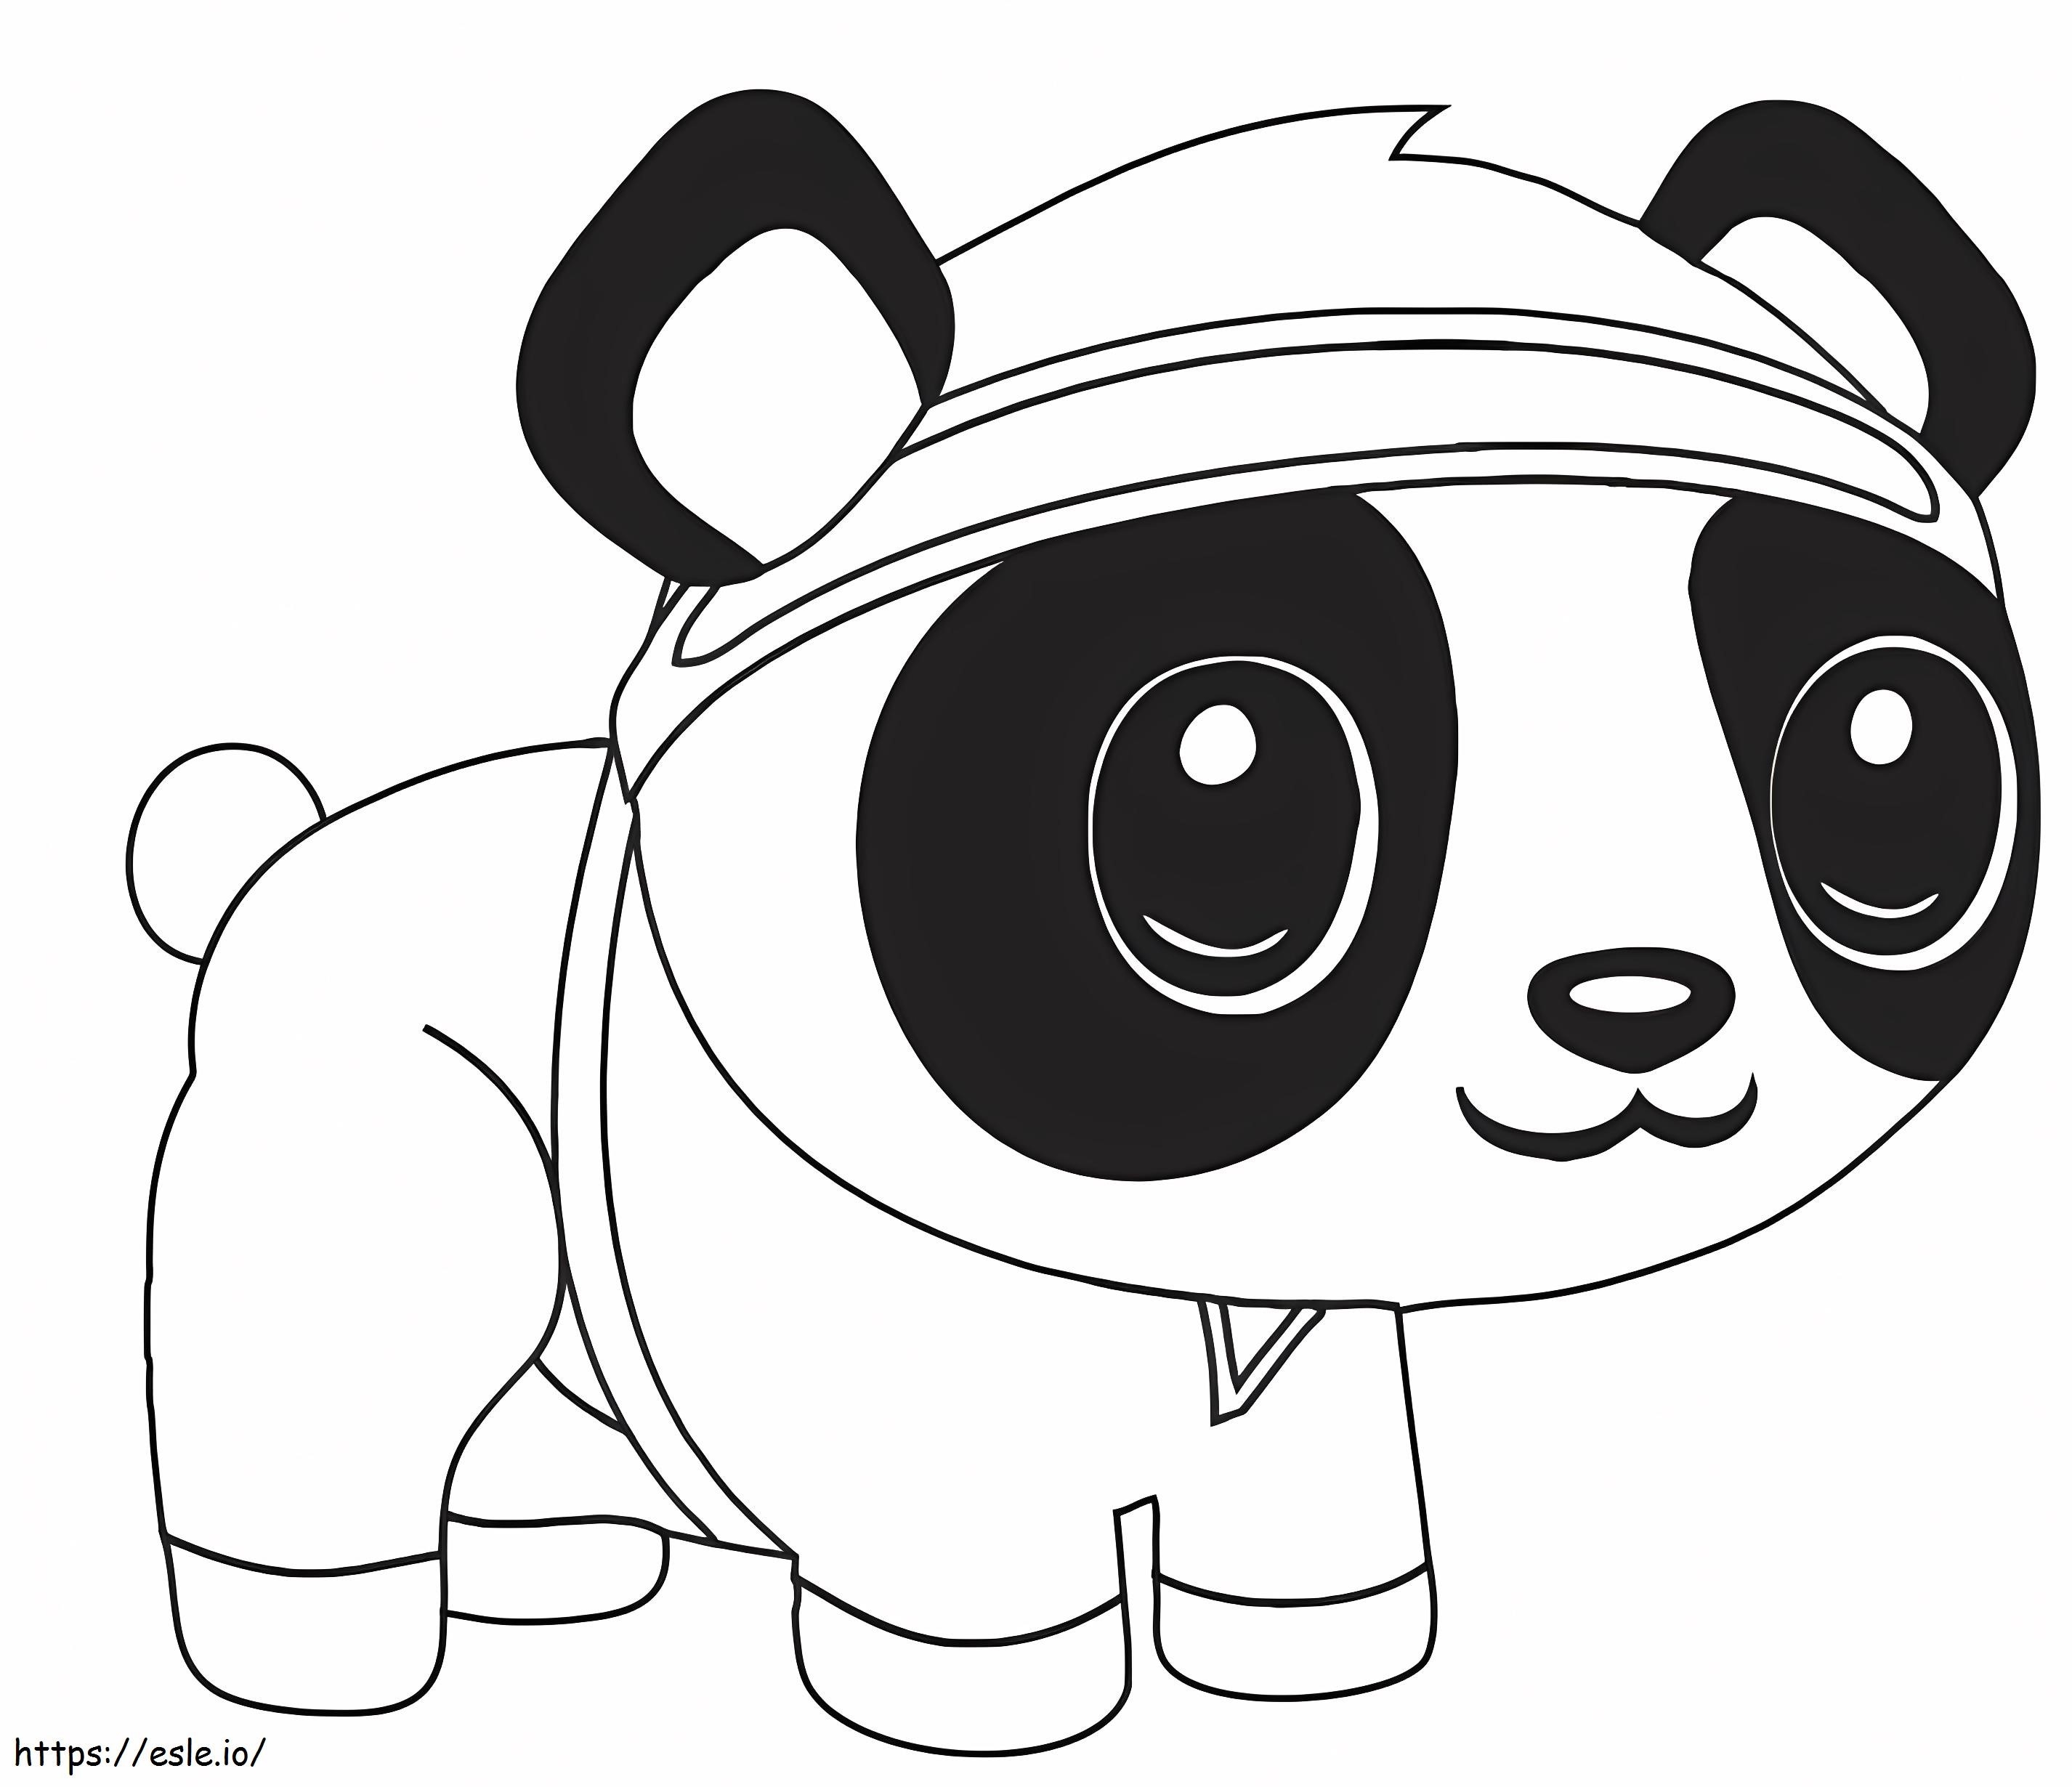 1560153081 Panda A4 coloring page